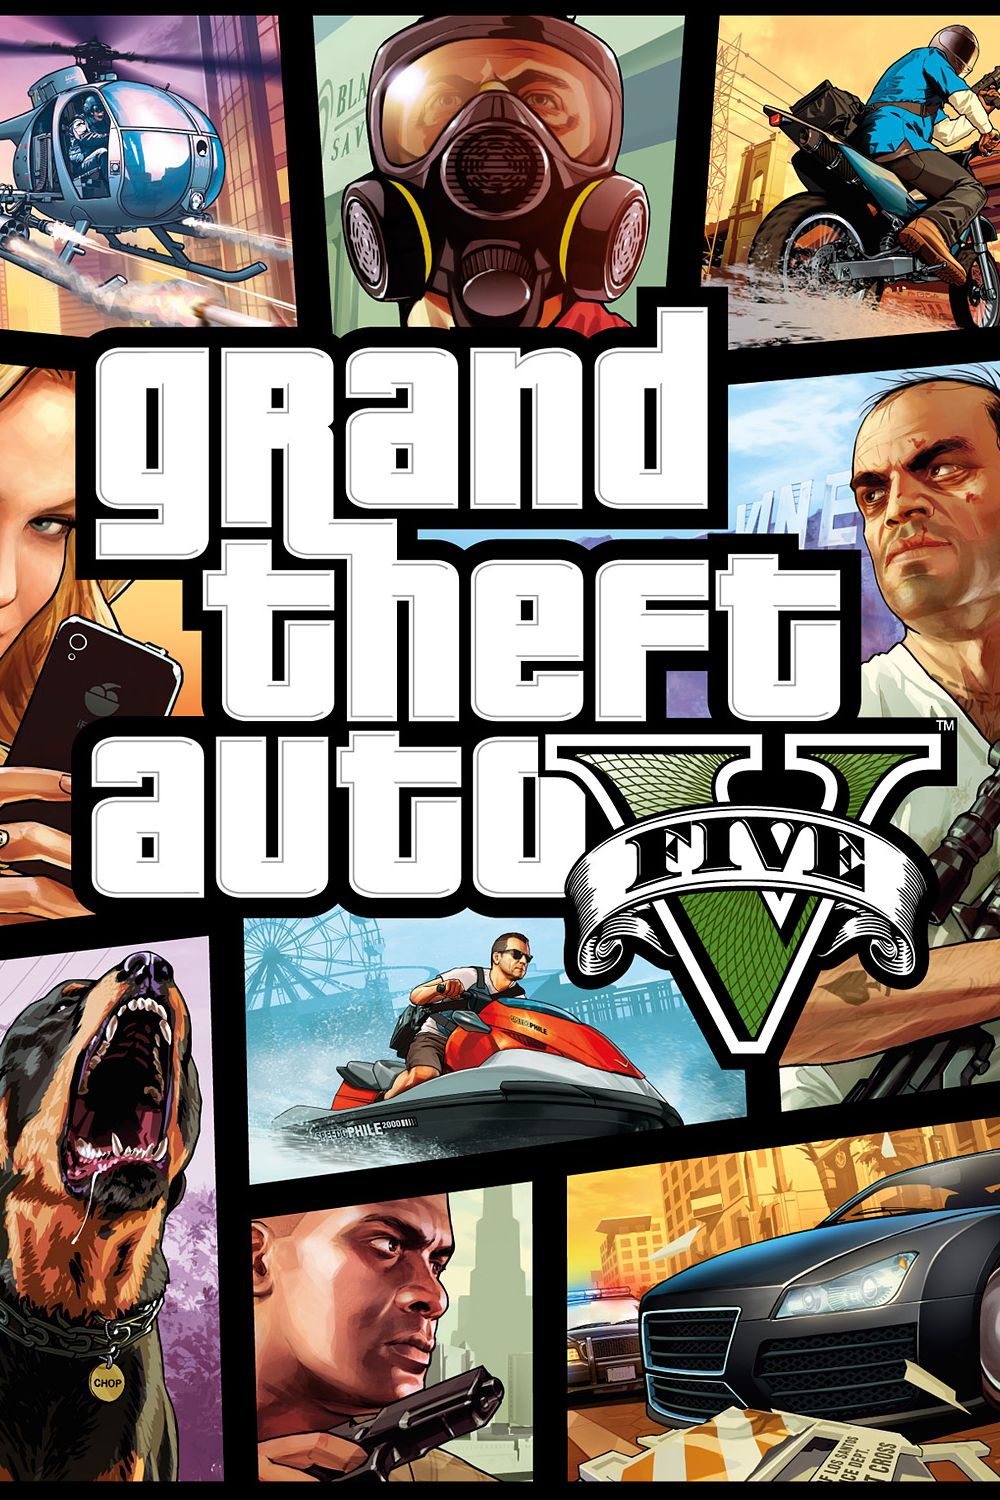 Grand Theft Auto V | GTA 5 | PS4/PS5 Game